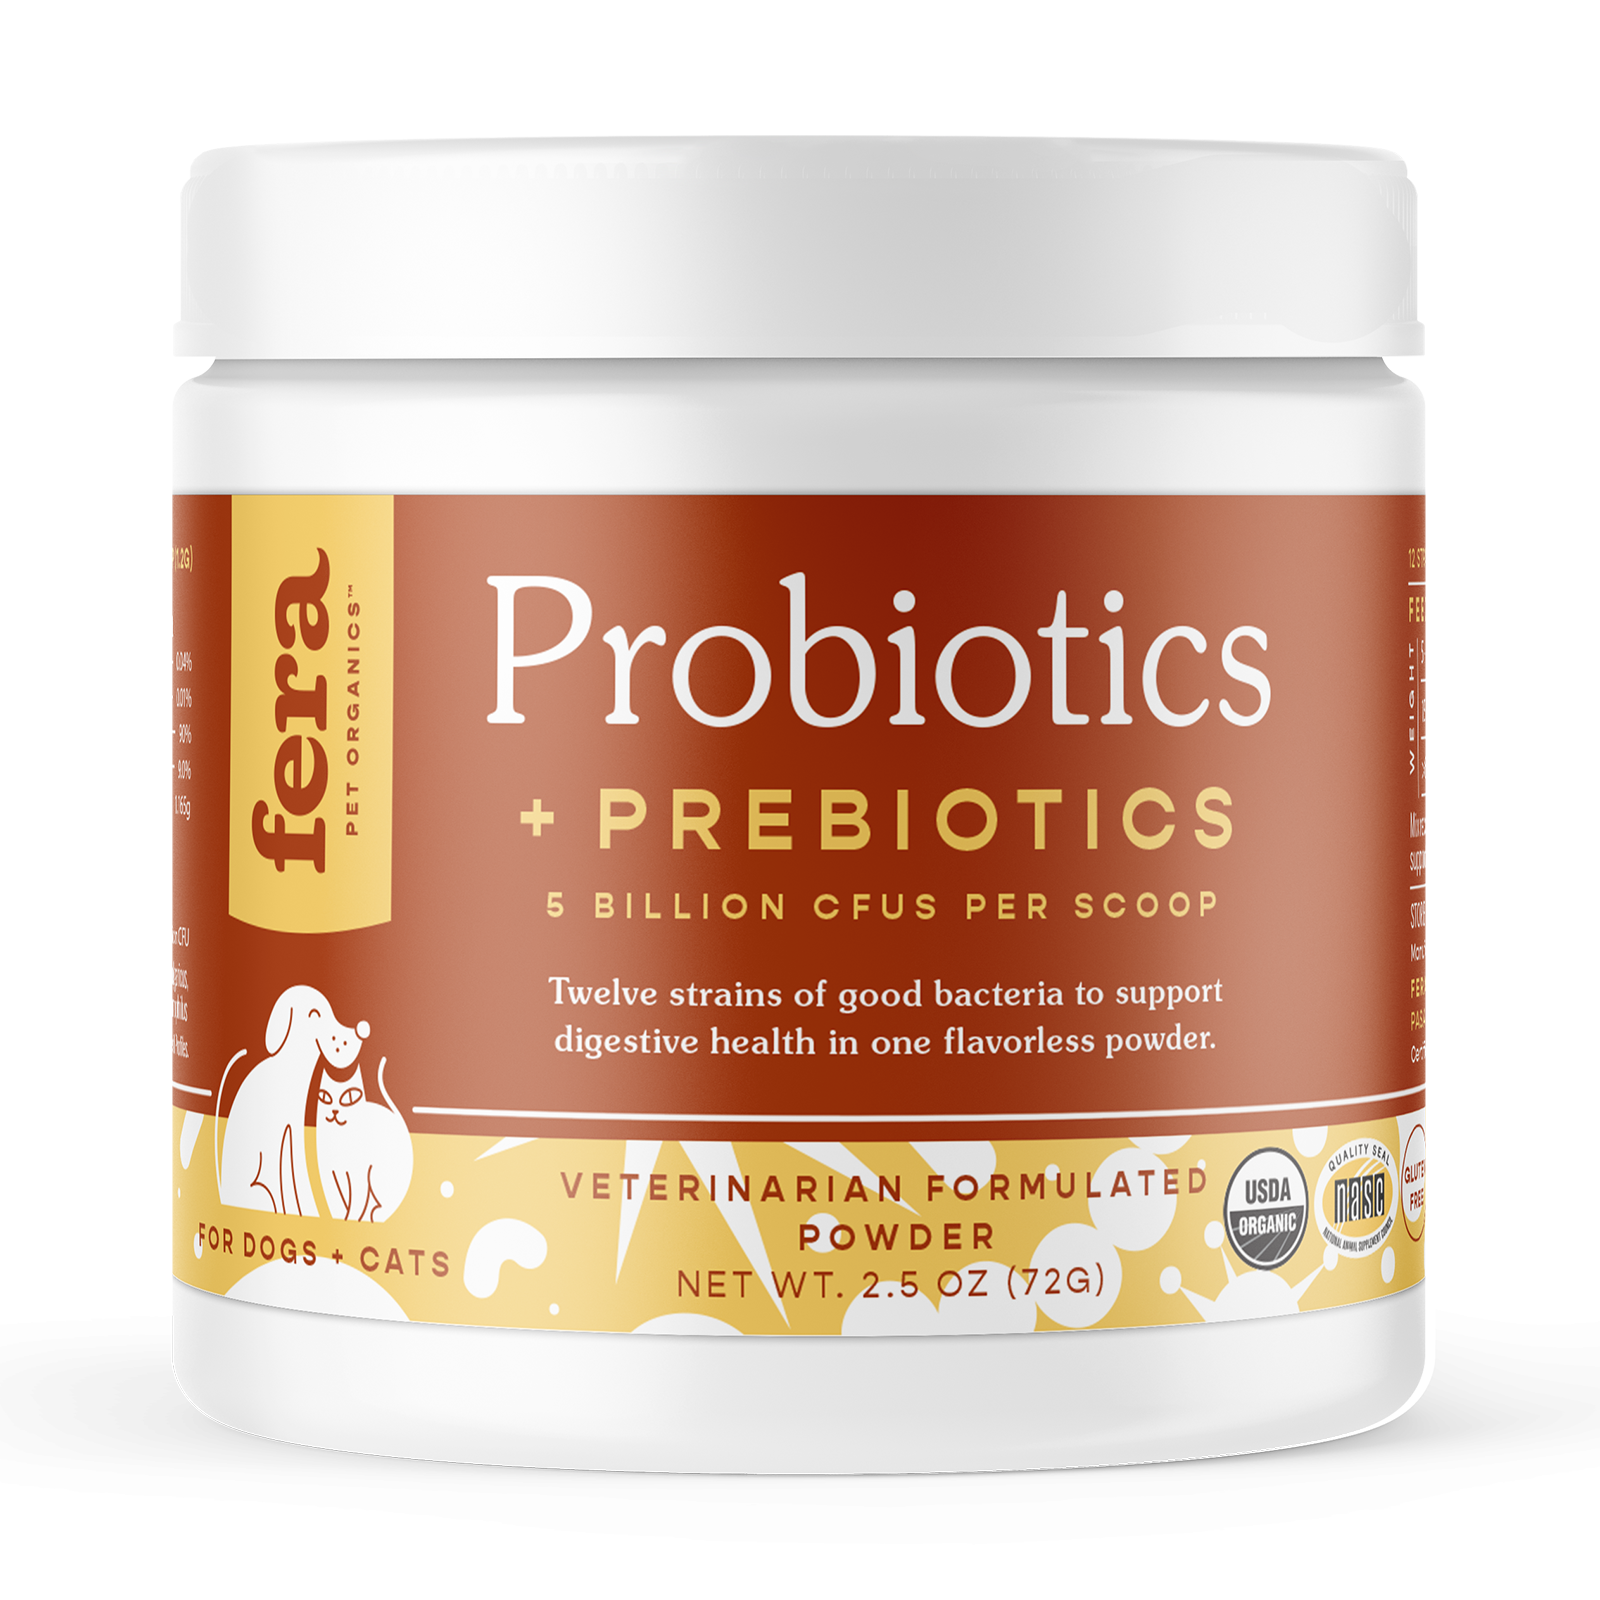 USDA Organic Probiotics with Prebiotics